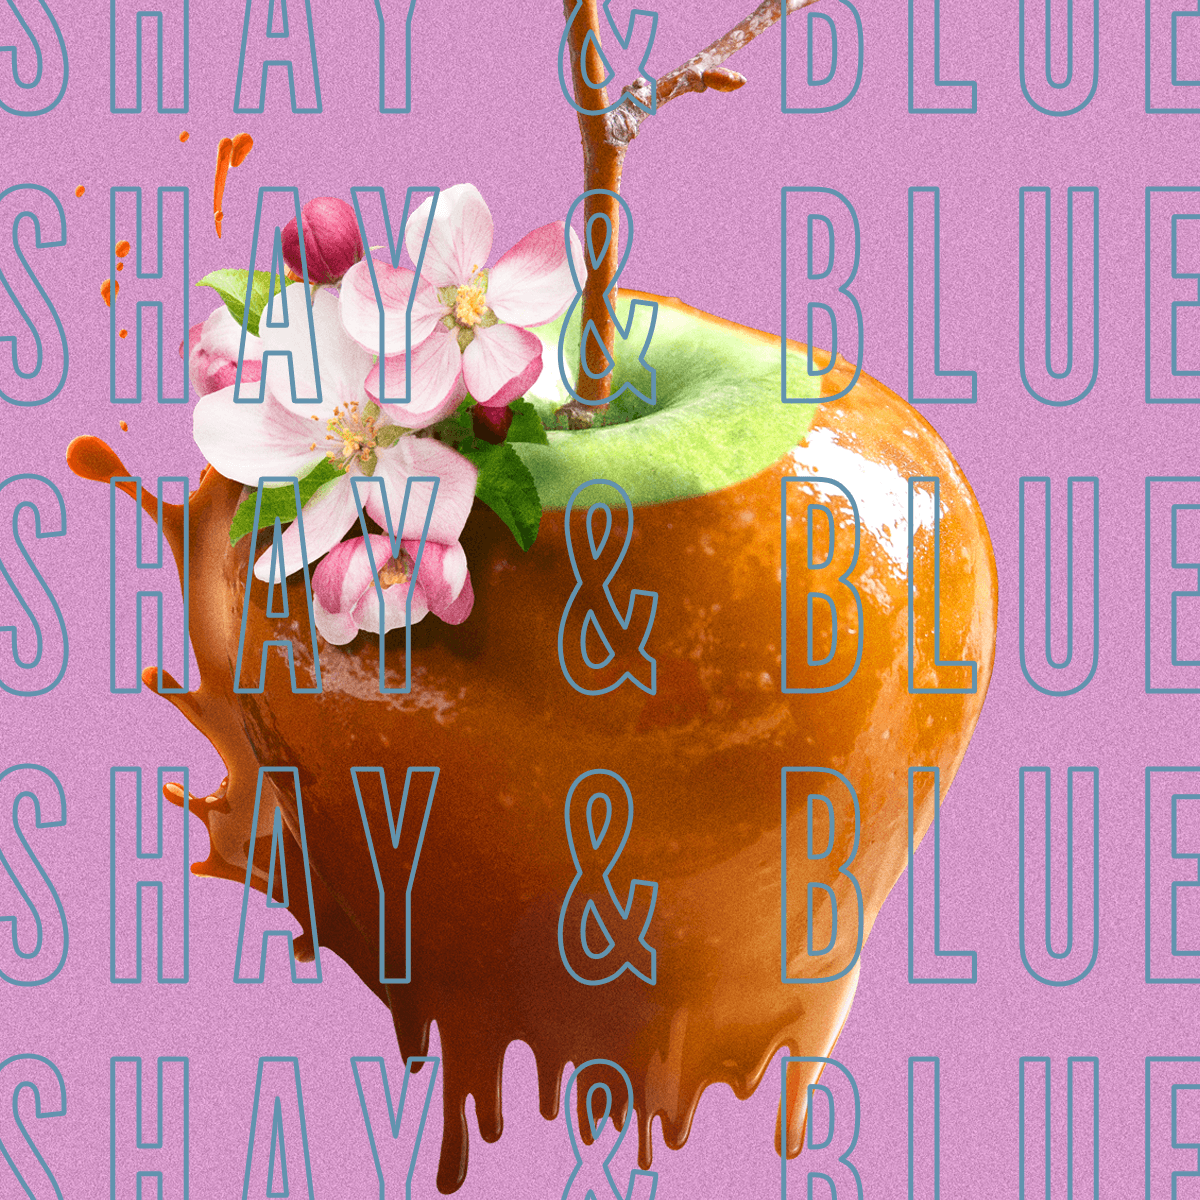 Melrose Apple Blossom Fragrance 3.4oz – Shay & Blue USA